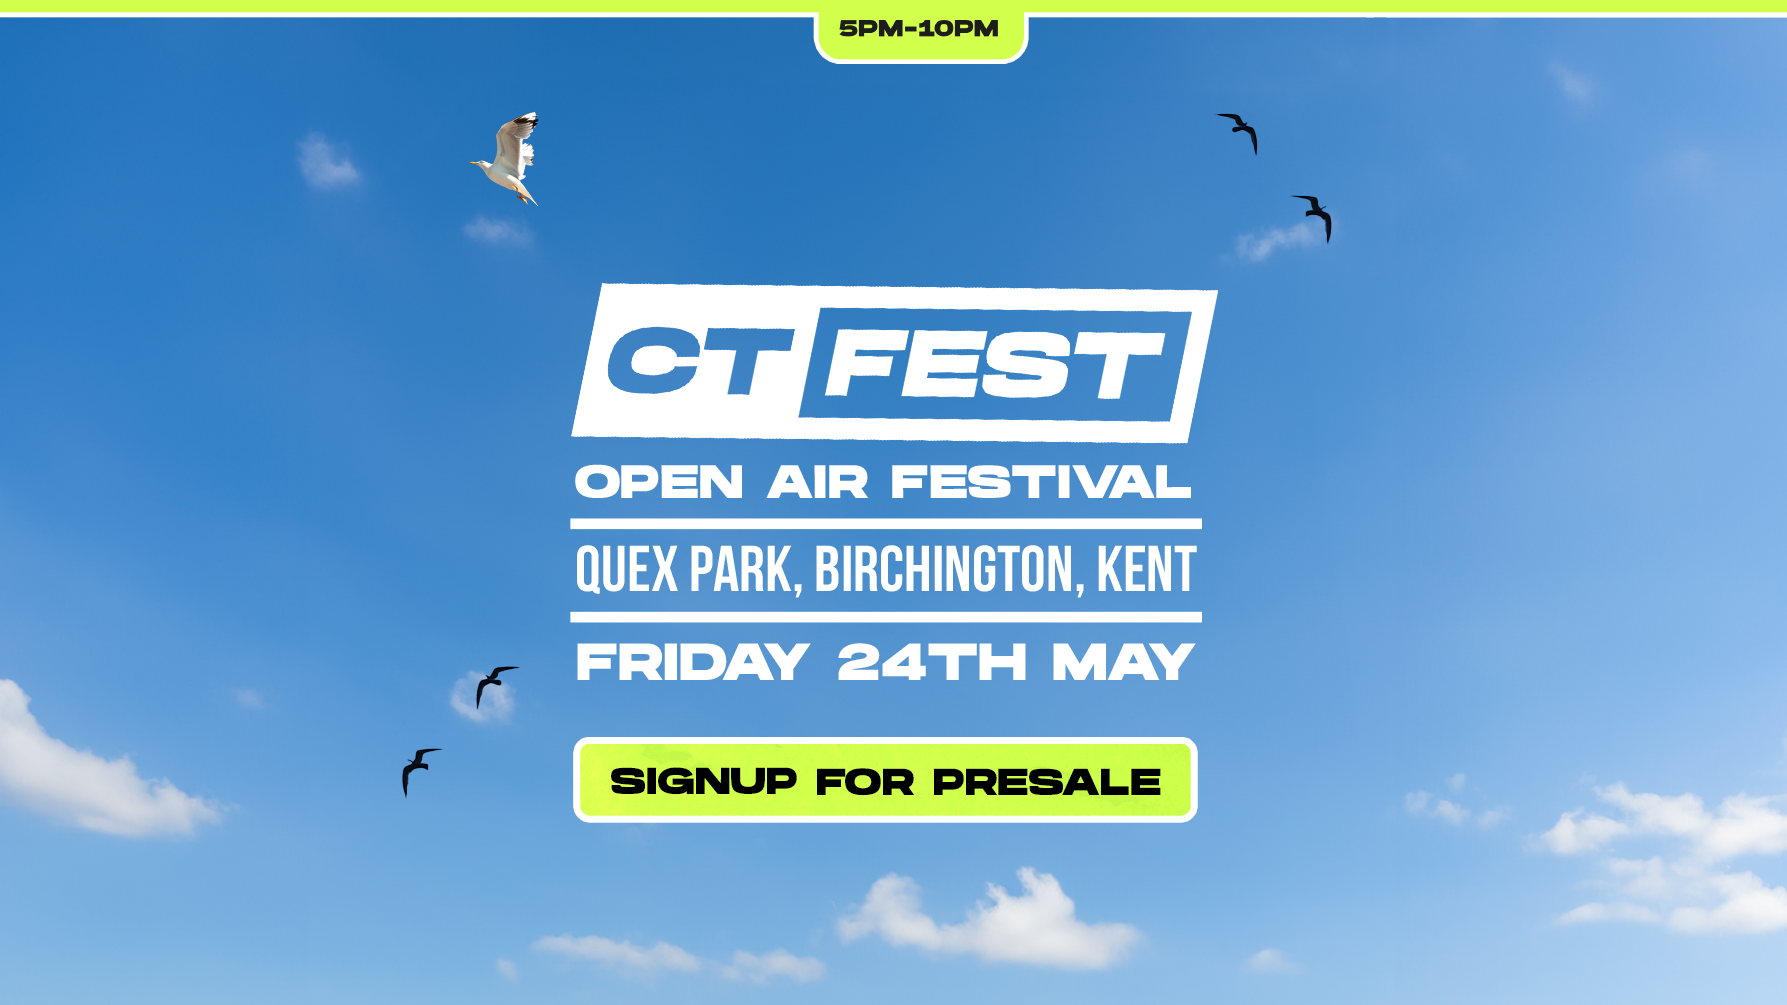 CT Fest ∙ OPEN AIR FESTIVAL SIGNUP